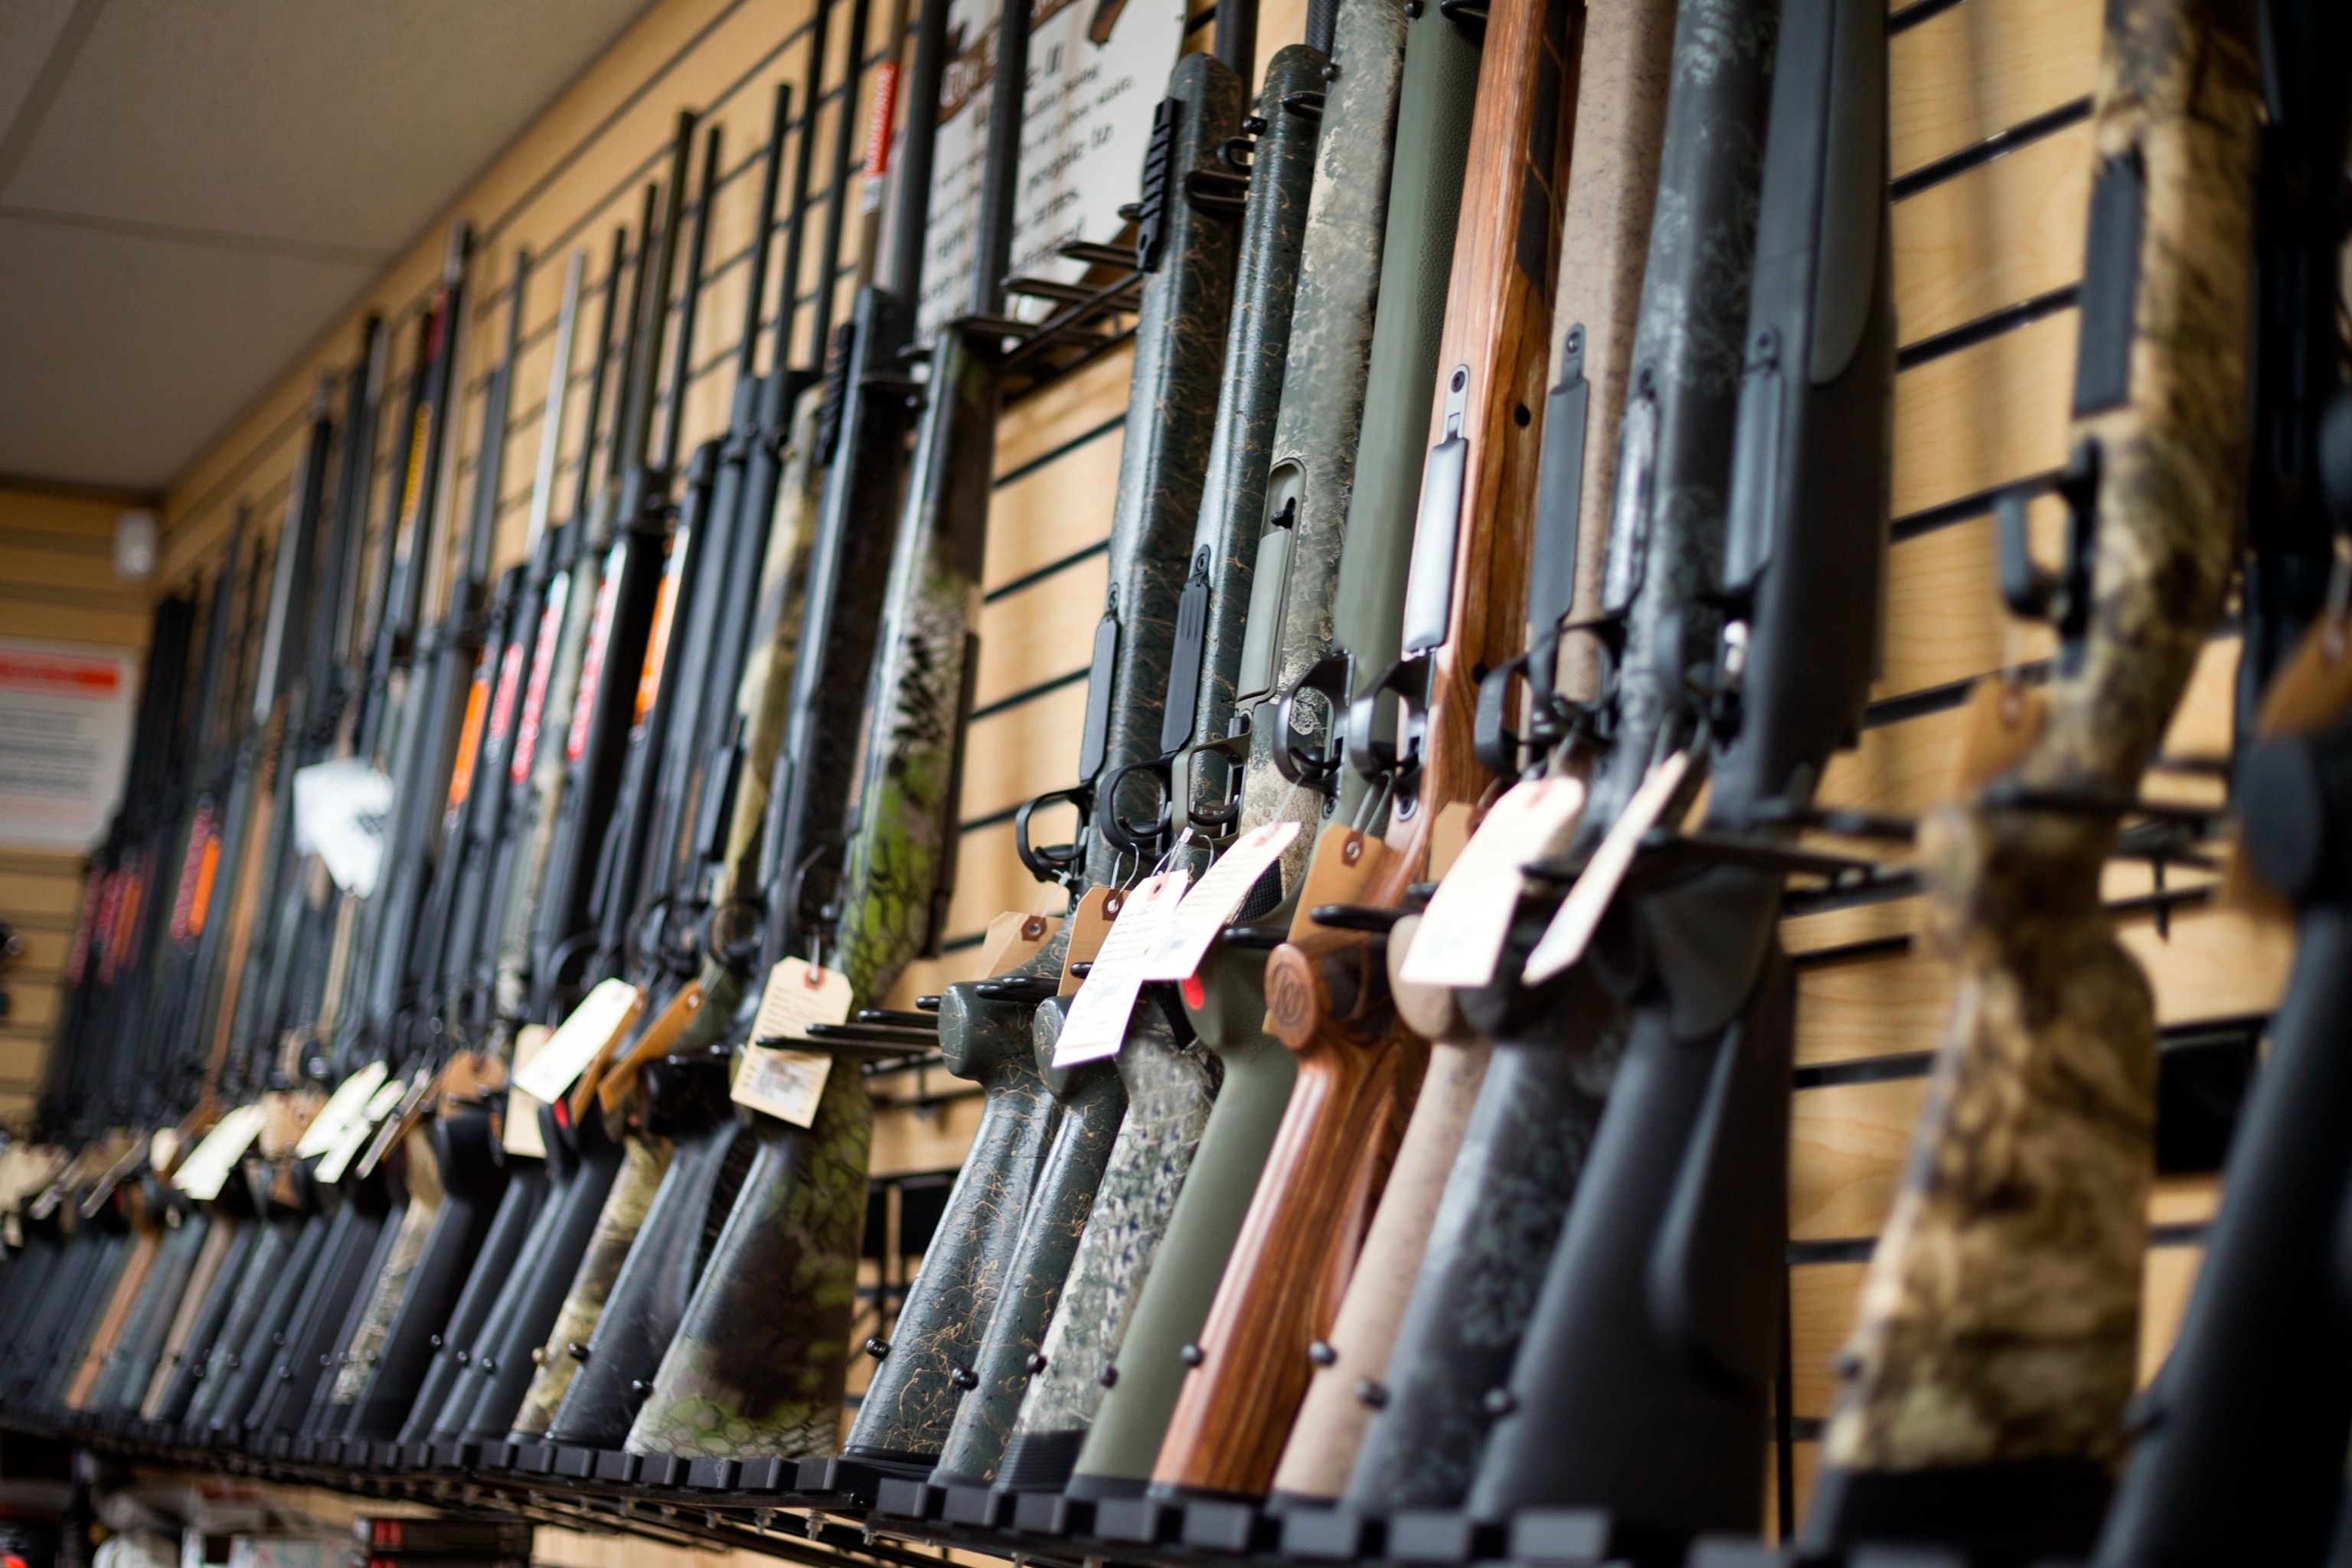 PHOTO: A rifle gun display is seen on the wall of a gun shop in Colorado.